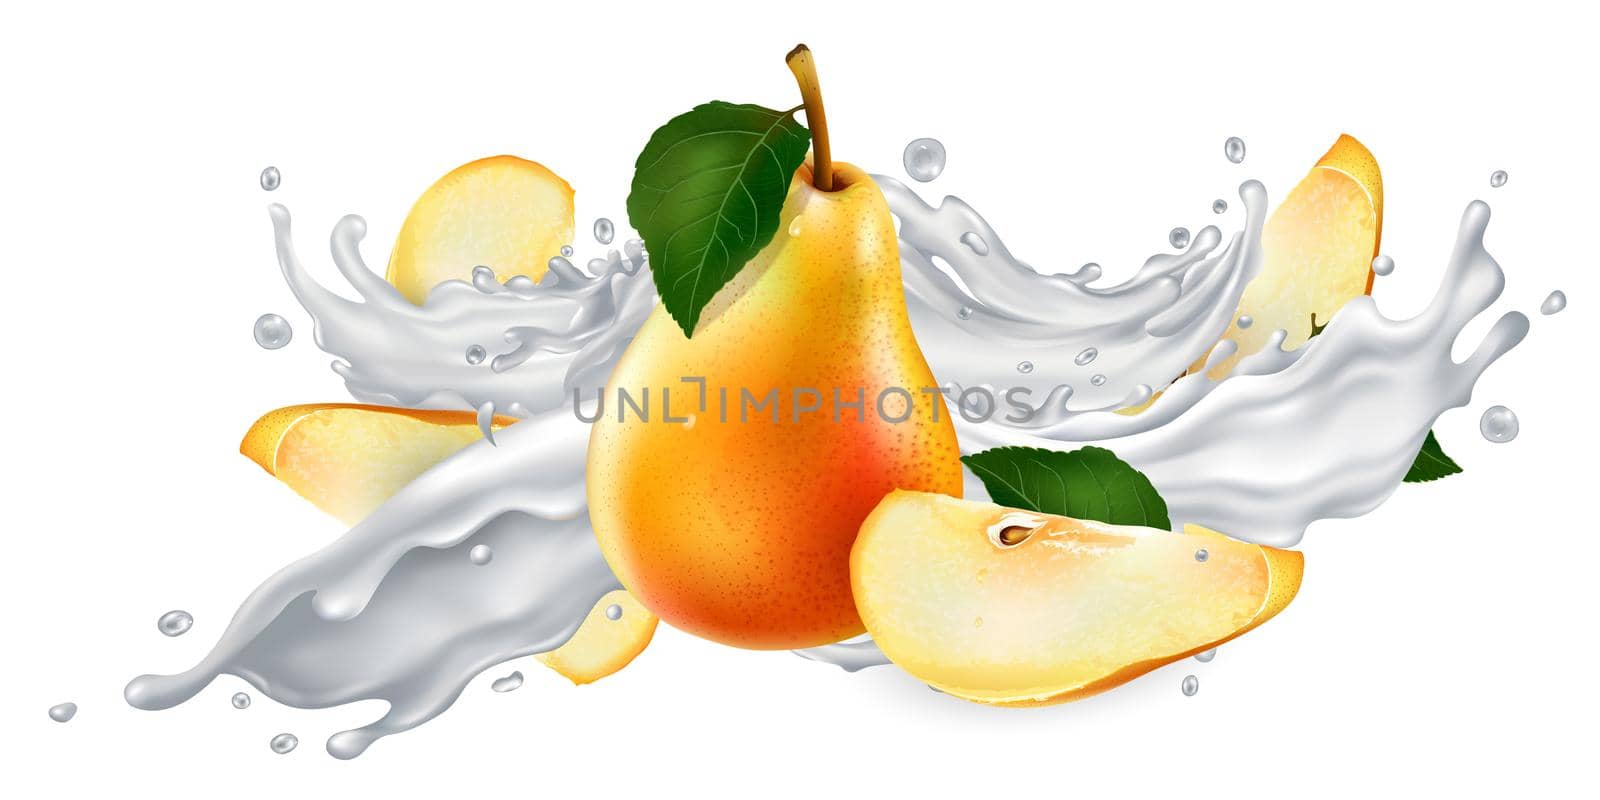 Pears in a milk or yogurt splash. by ConceptCafe